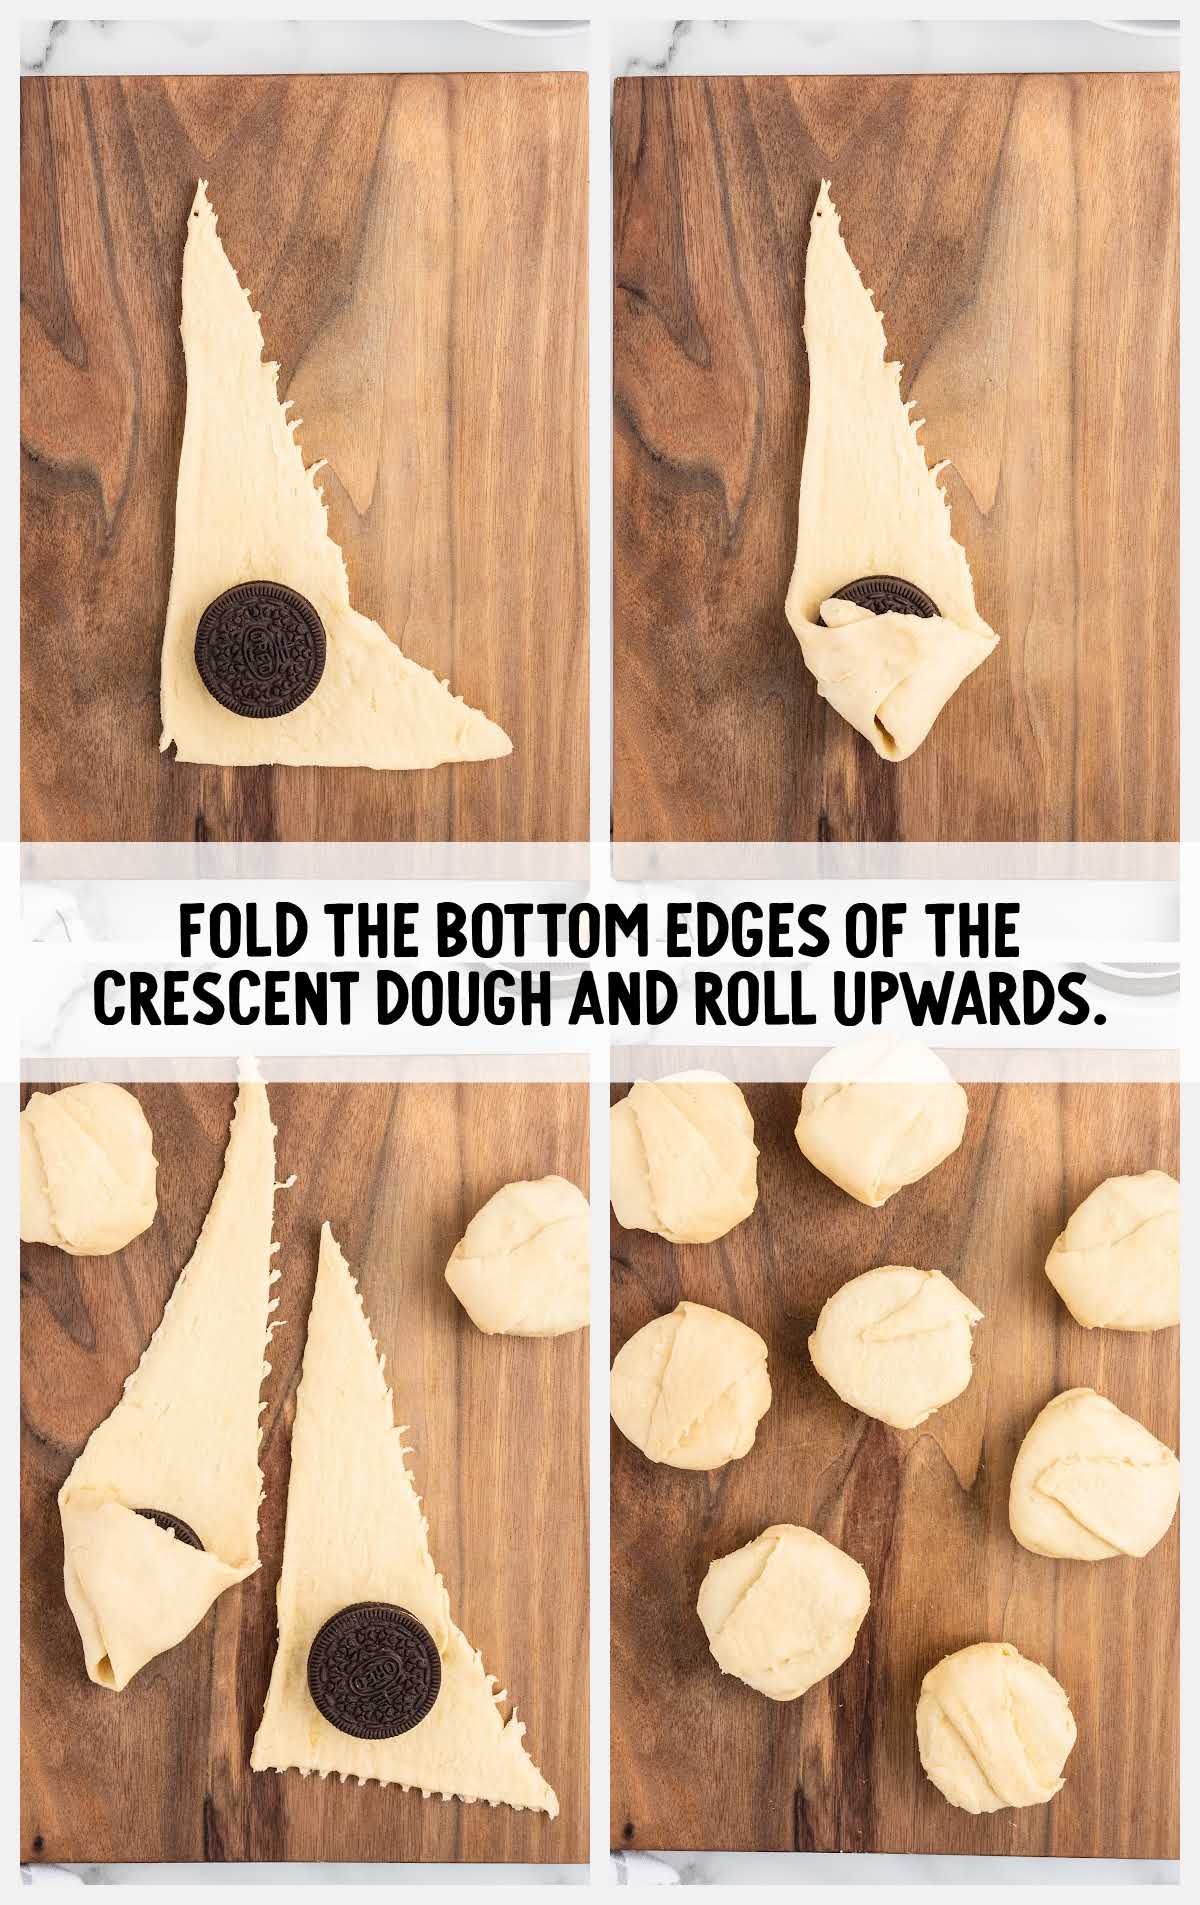 fold crescent dough and roll upwards